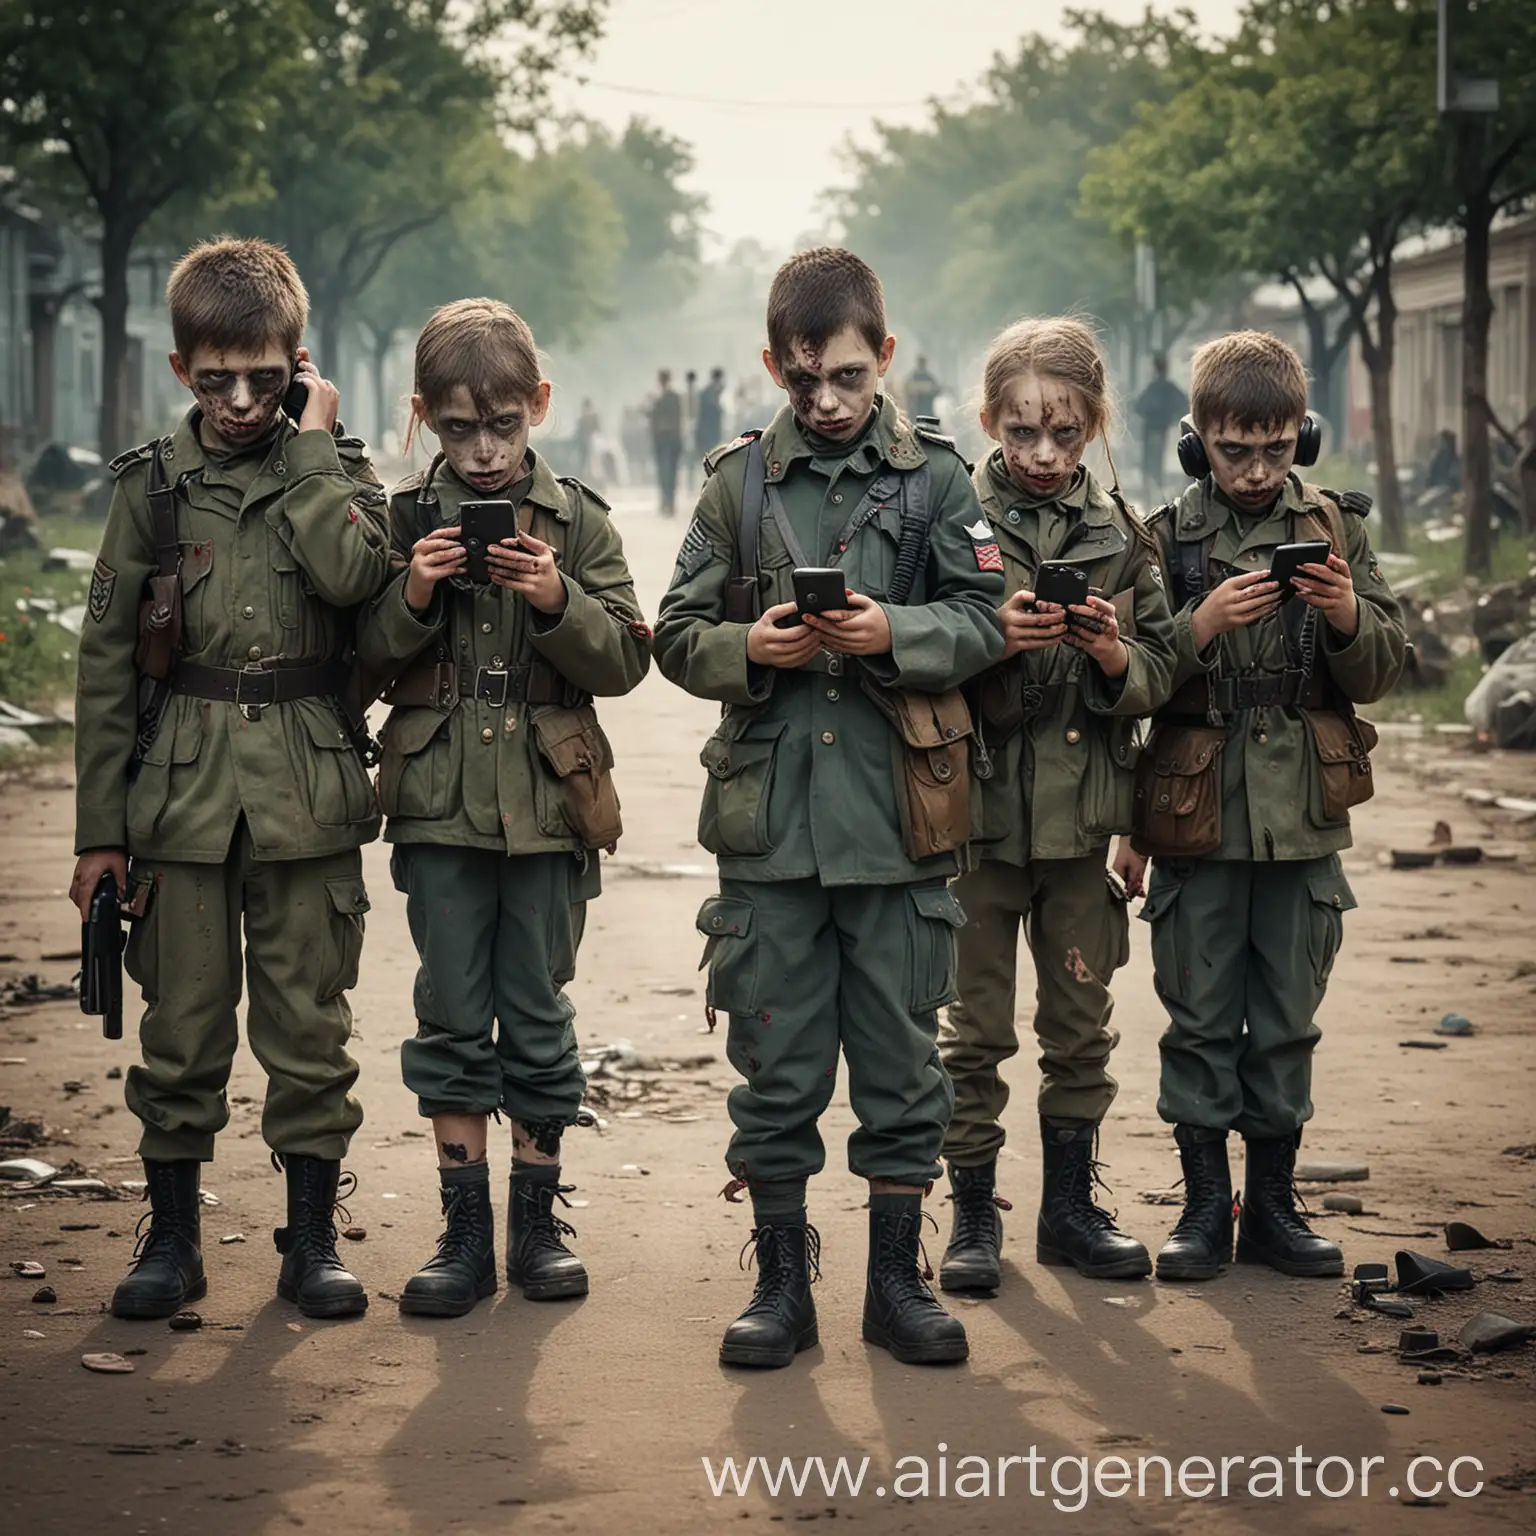 Children-Zombie-Soldiers-with-Phones